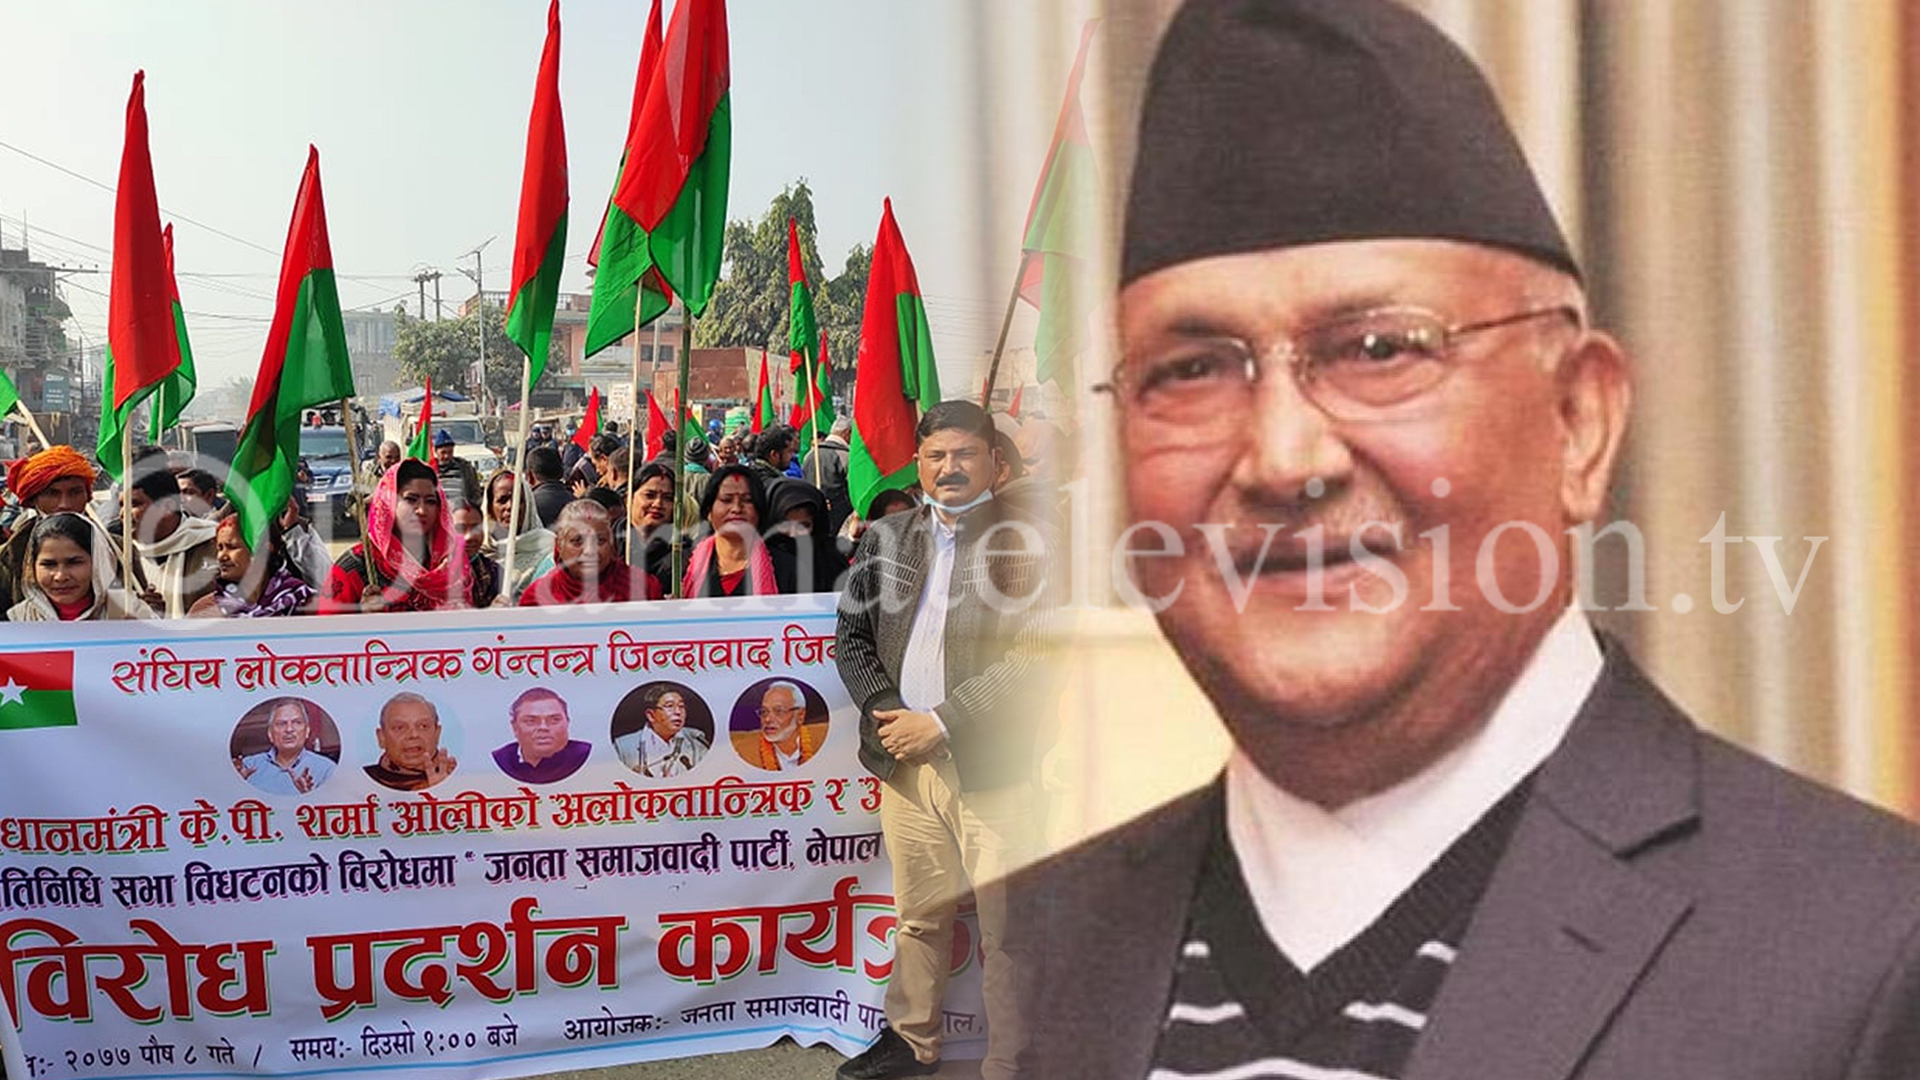 Janata Samajwadi Party has protested against Prime Minister Oli's move for dissolving parliament